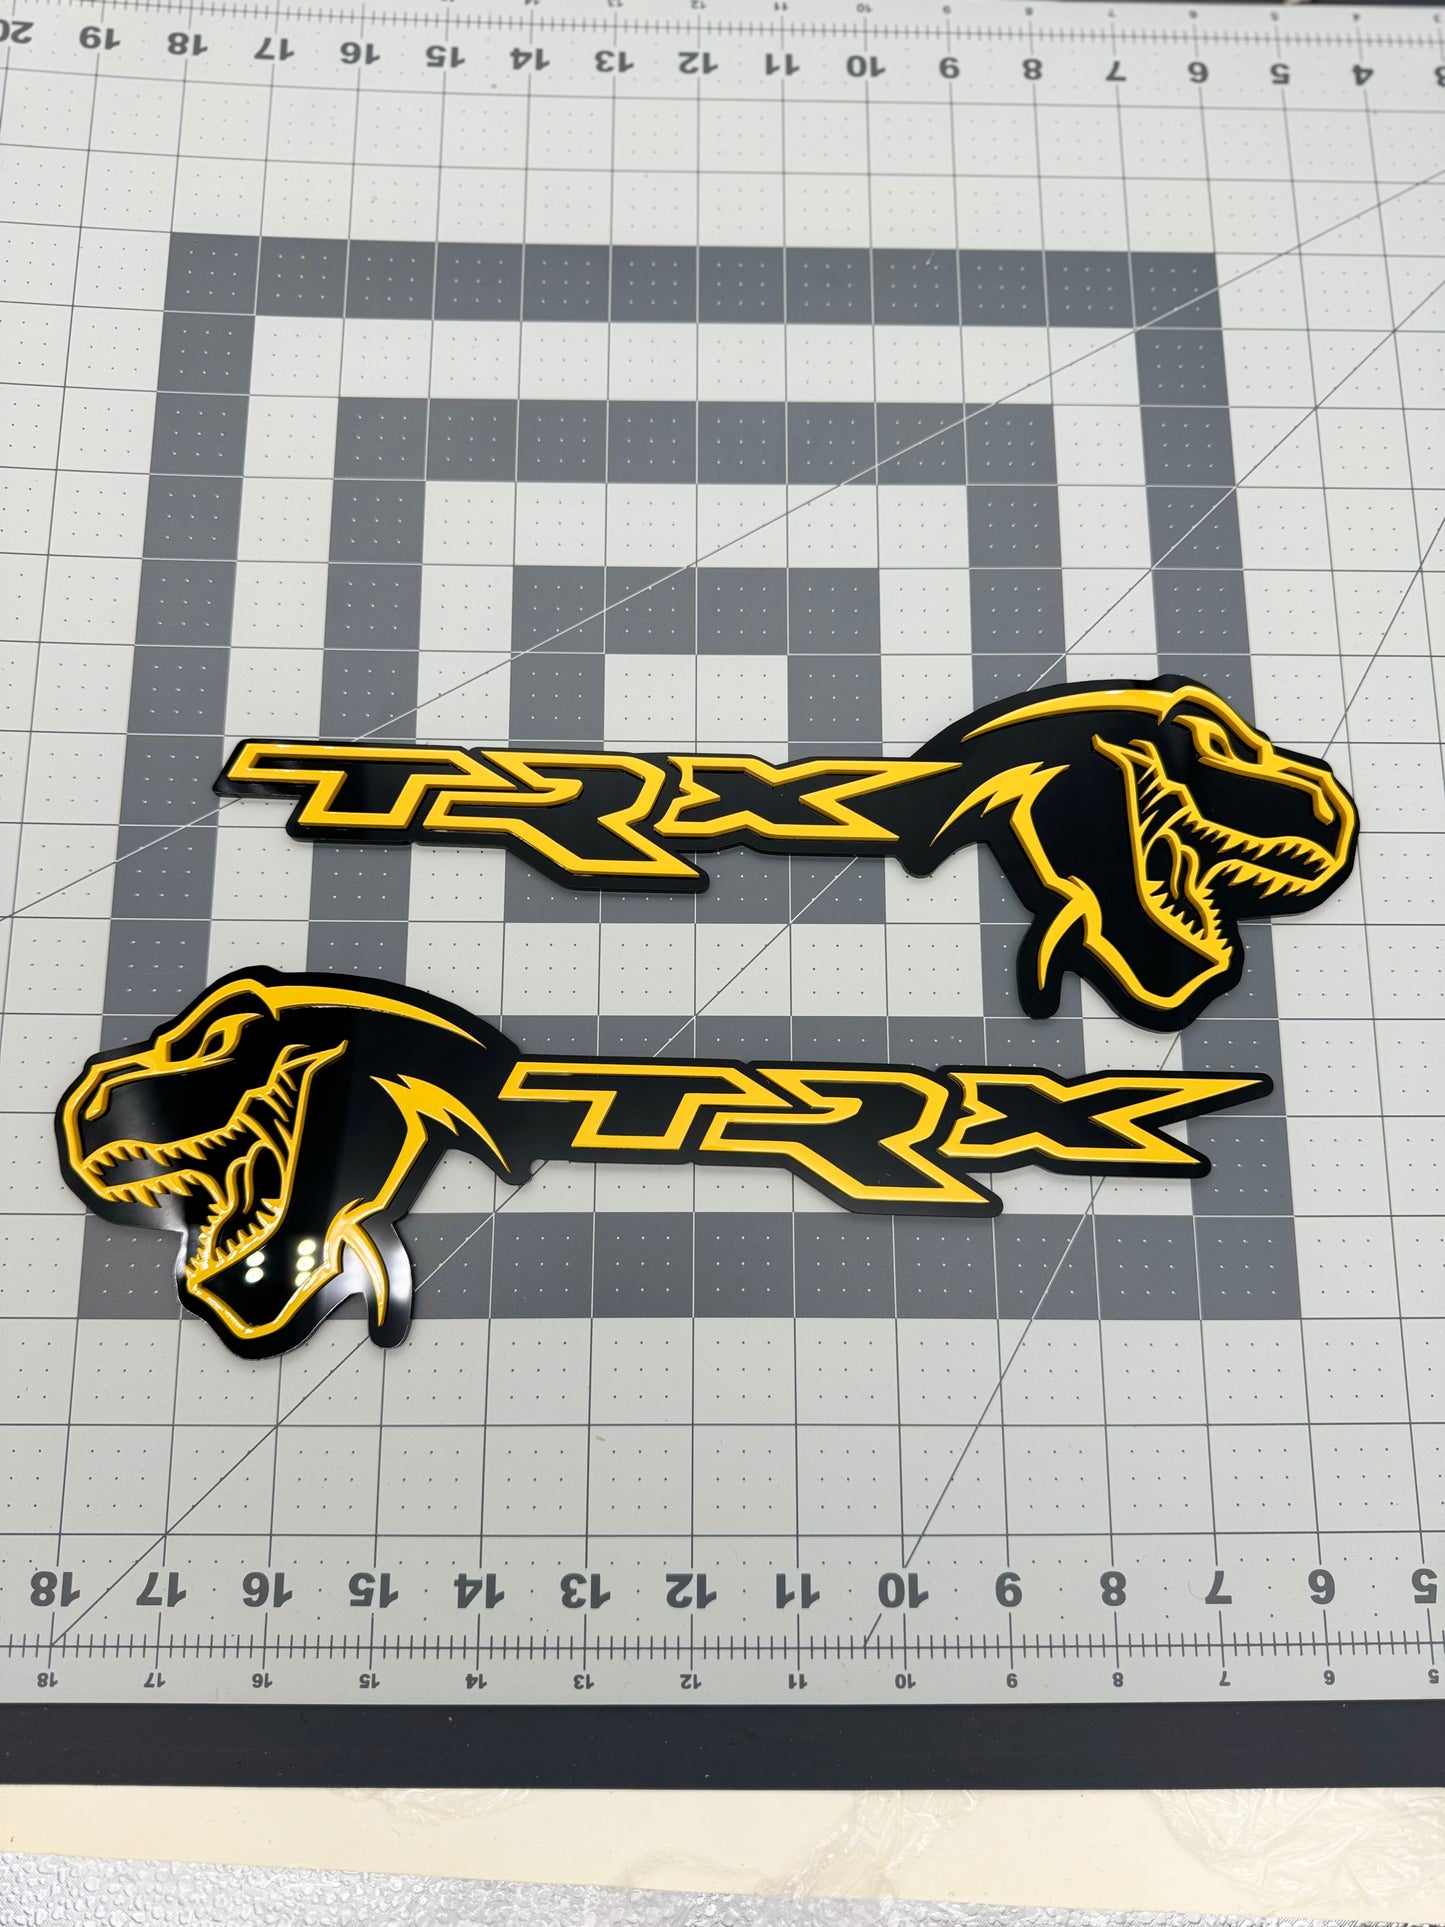 TREX/TRX combo badge single